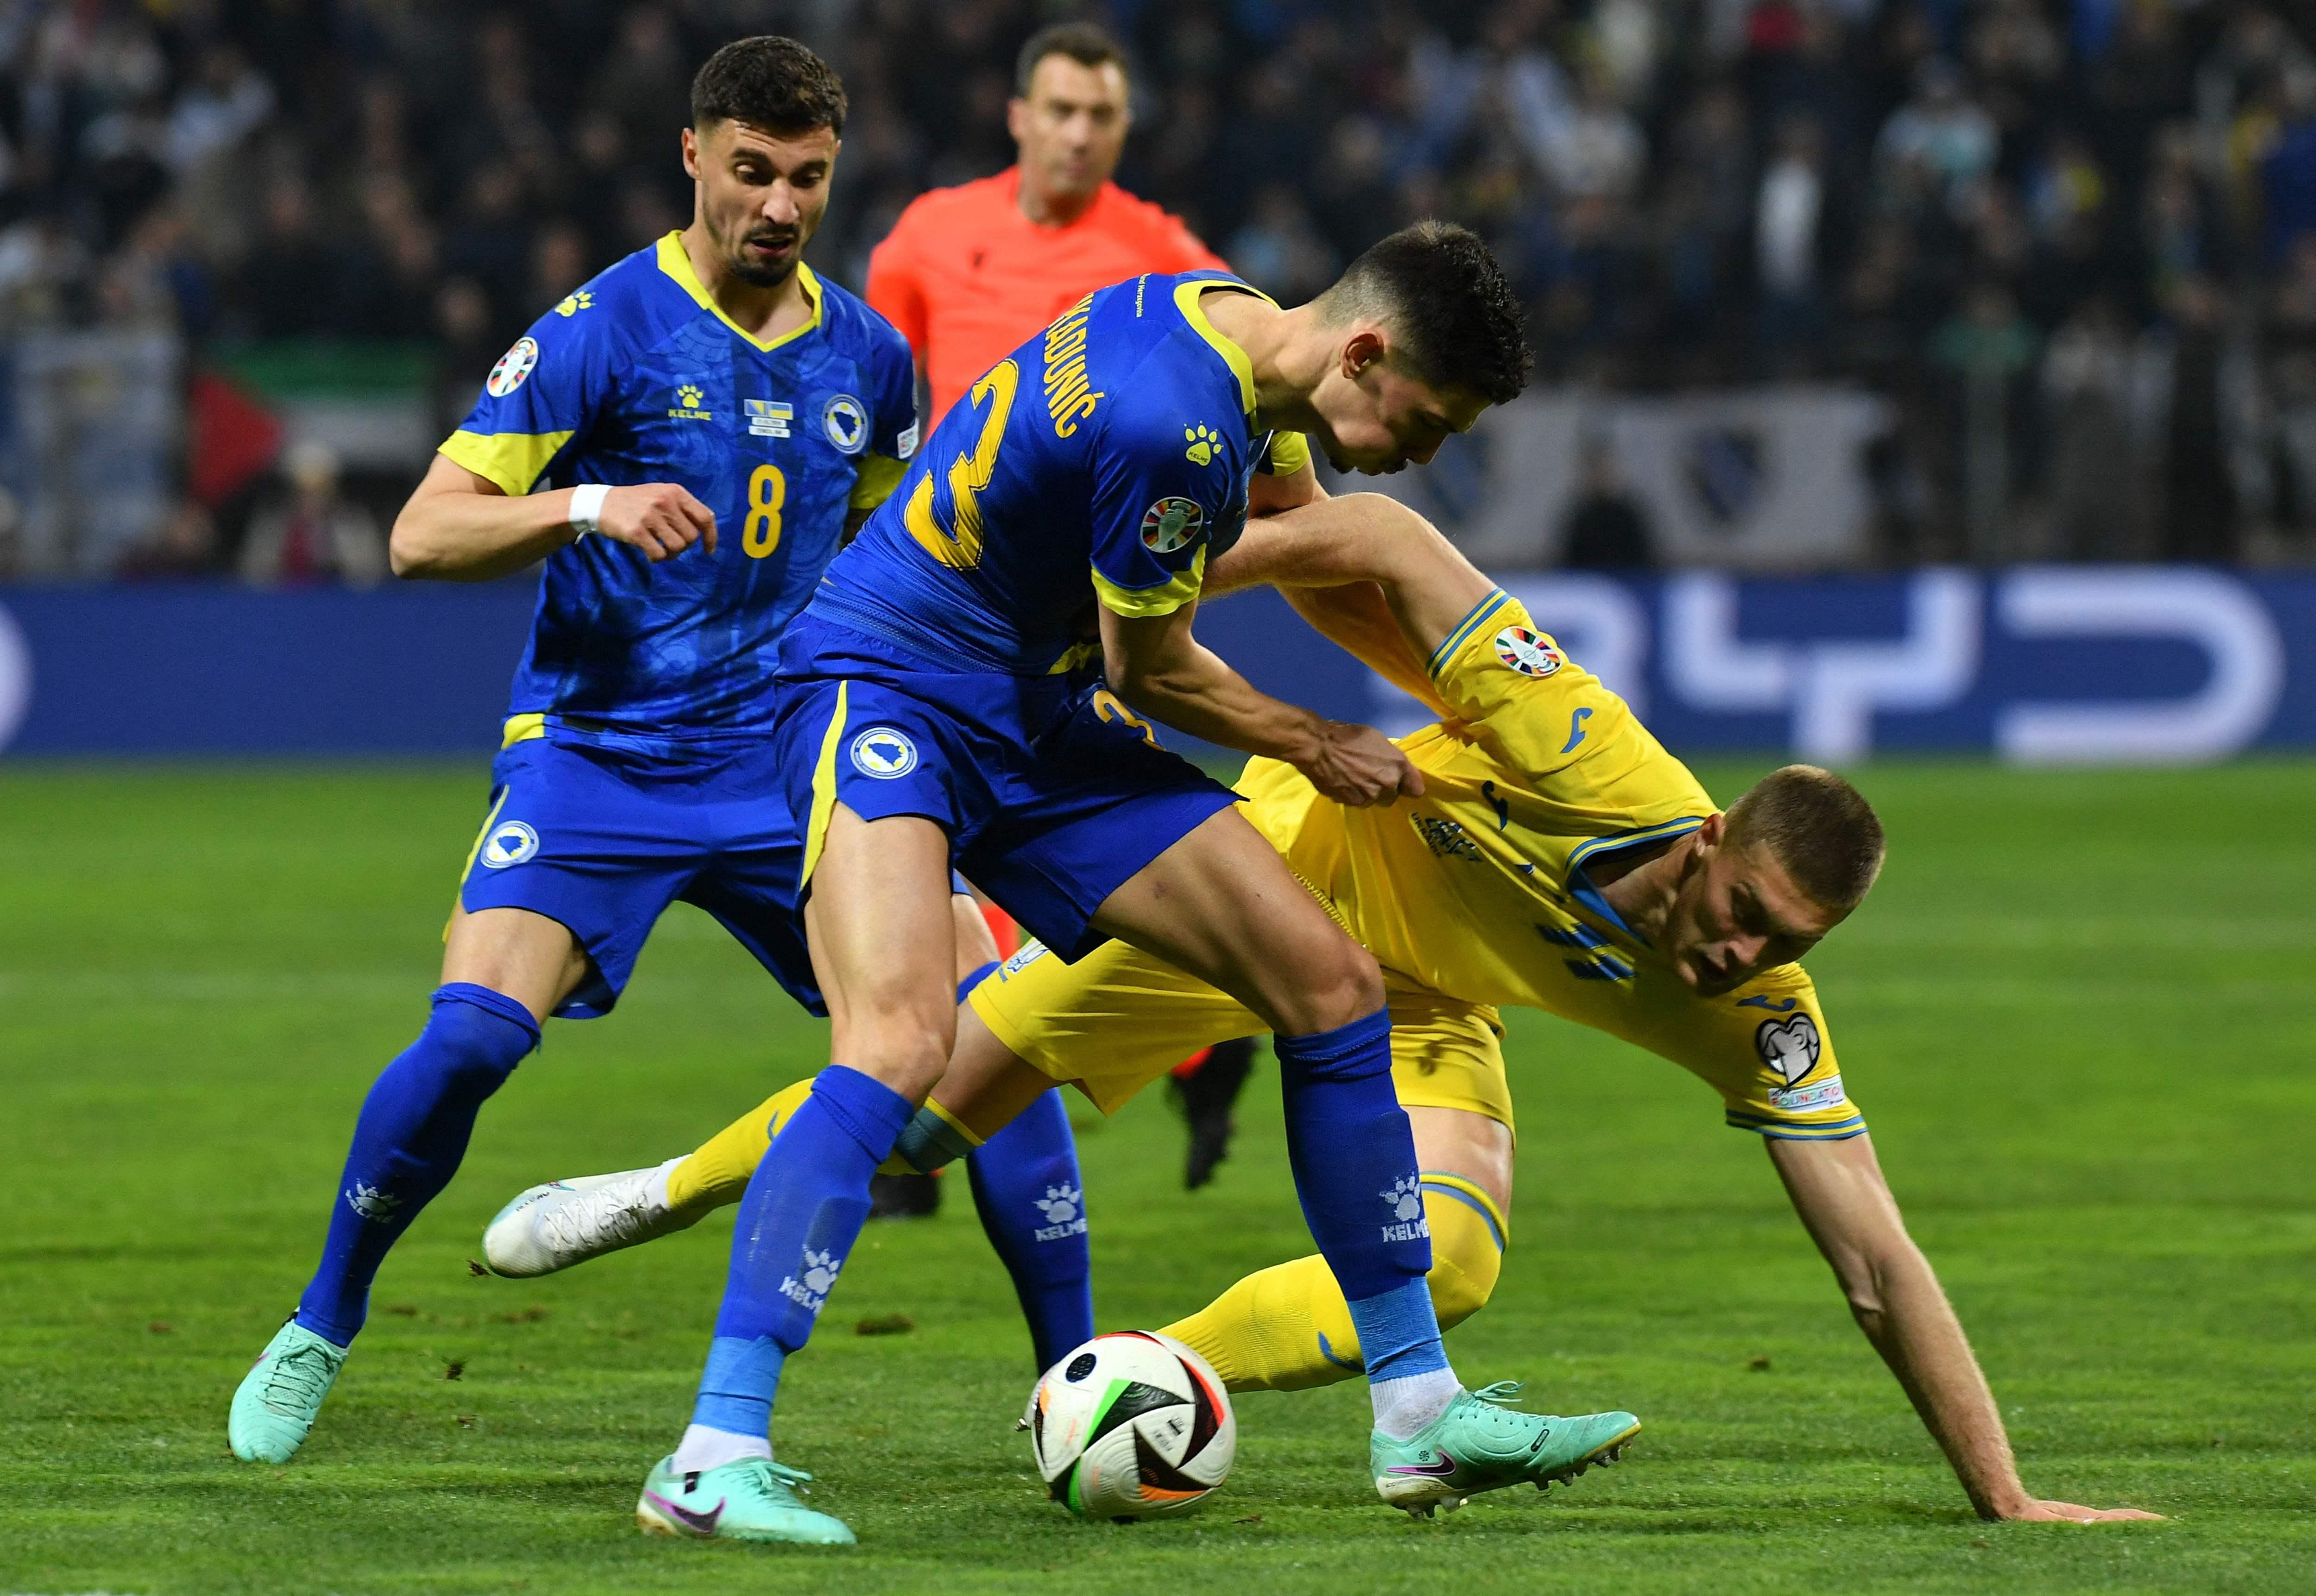 Ukraine eye first major tournament since Russian invasion